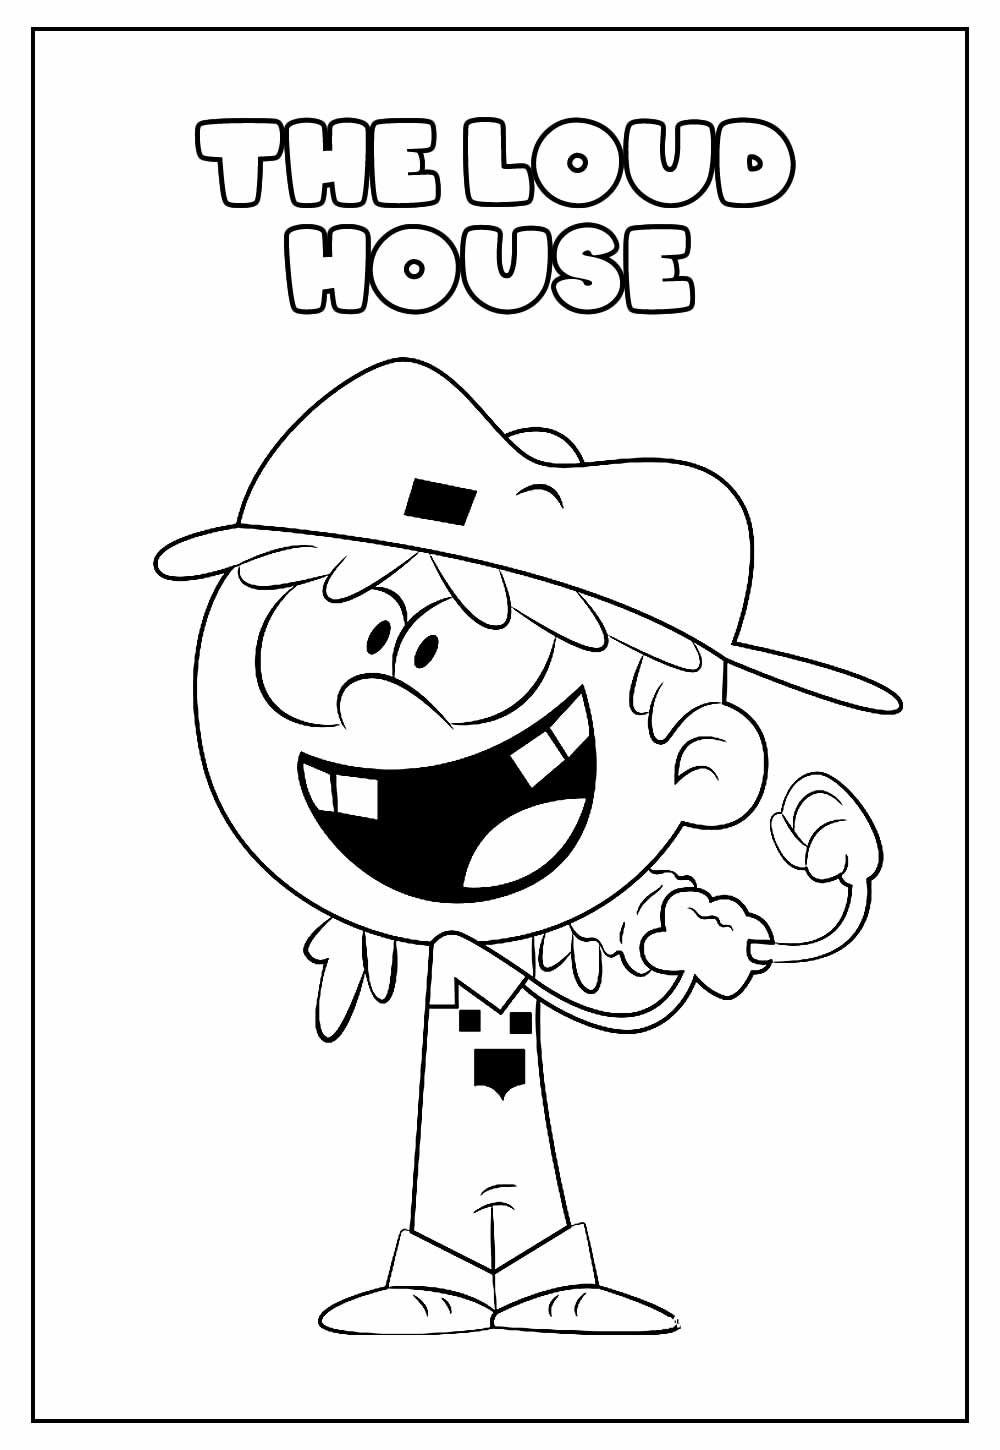 Desenho Educativo de The Loud House para colorir